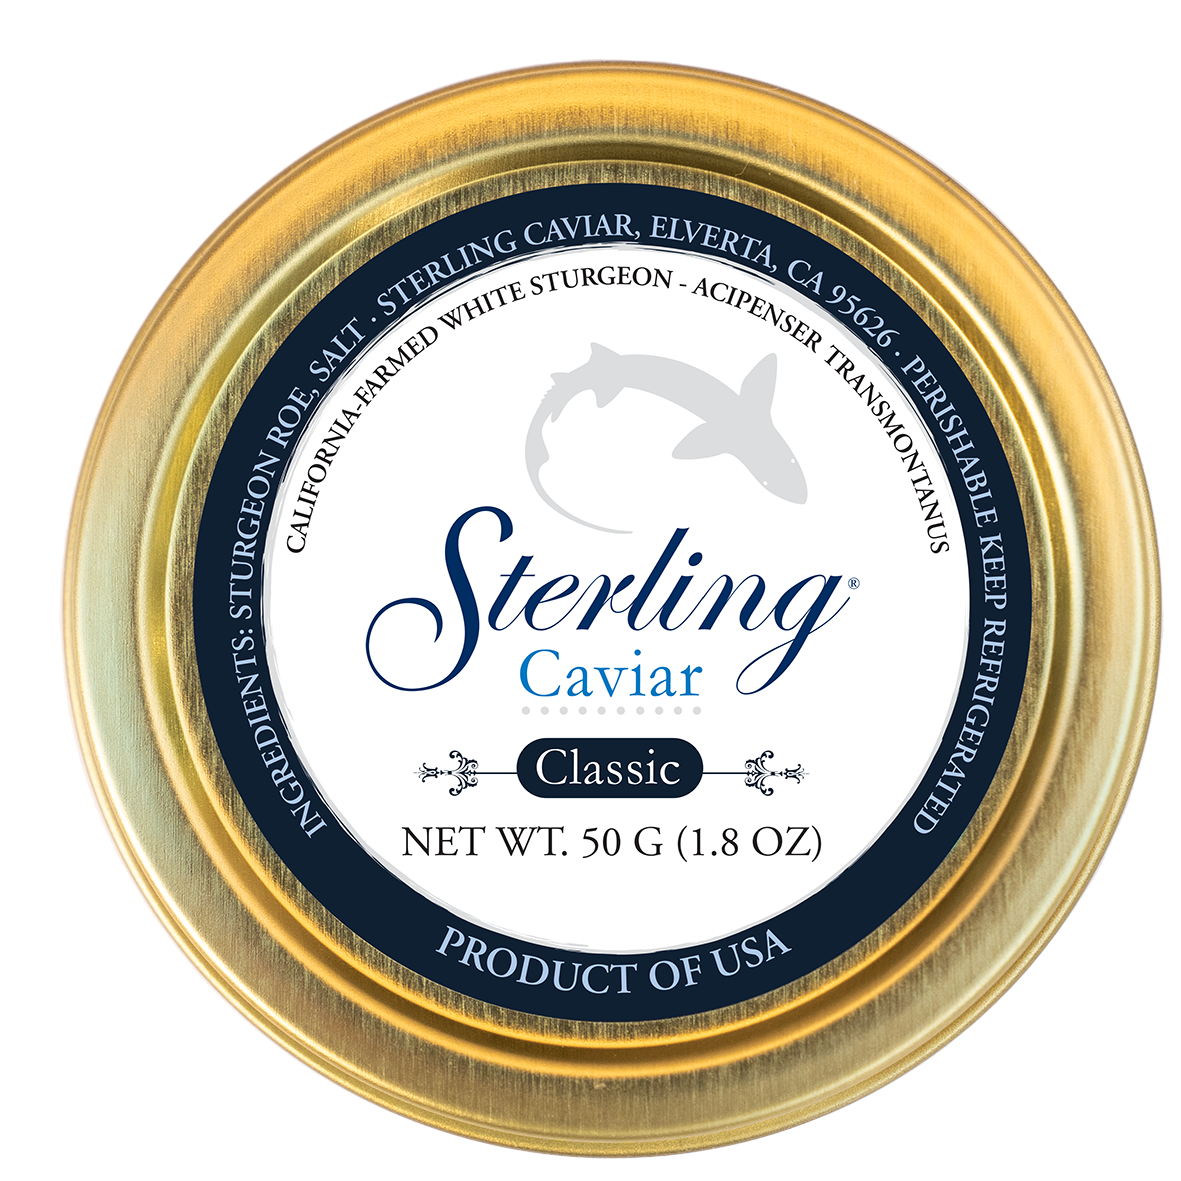 Classic Caviar (White Sturgeon) - Sterling Caviar